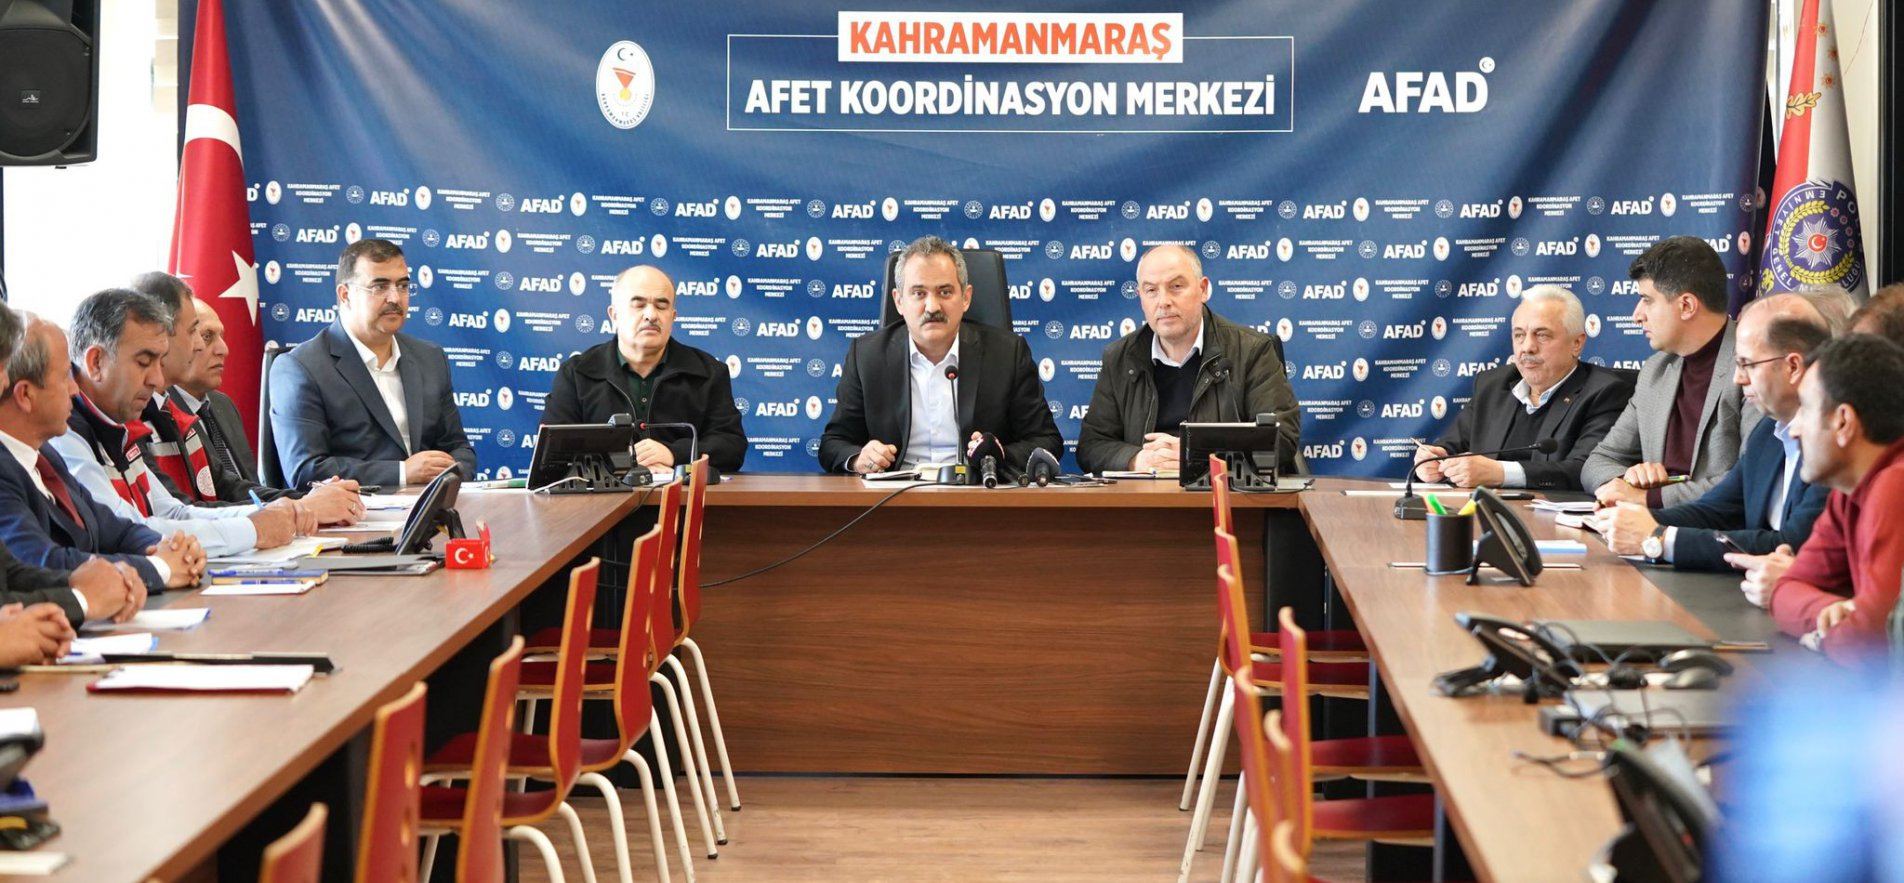 MINISTER ÖZER ATTENDS THE DISASTER COORDINATION MEETING IN KAHRAMANMARAŞ